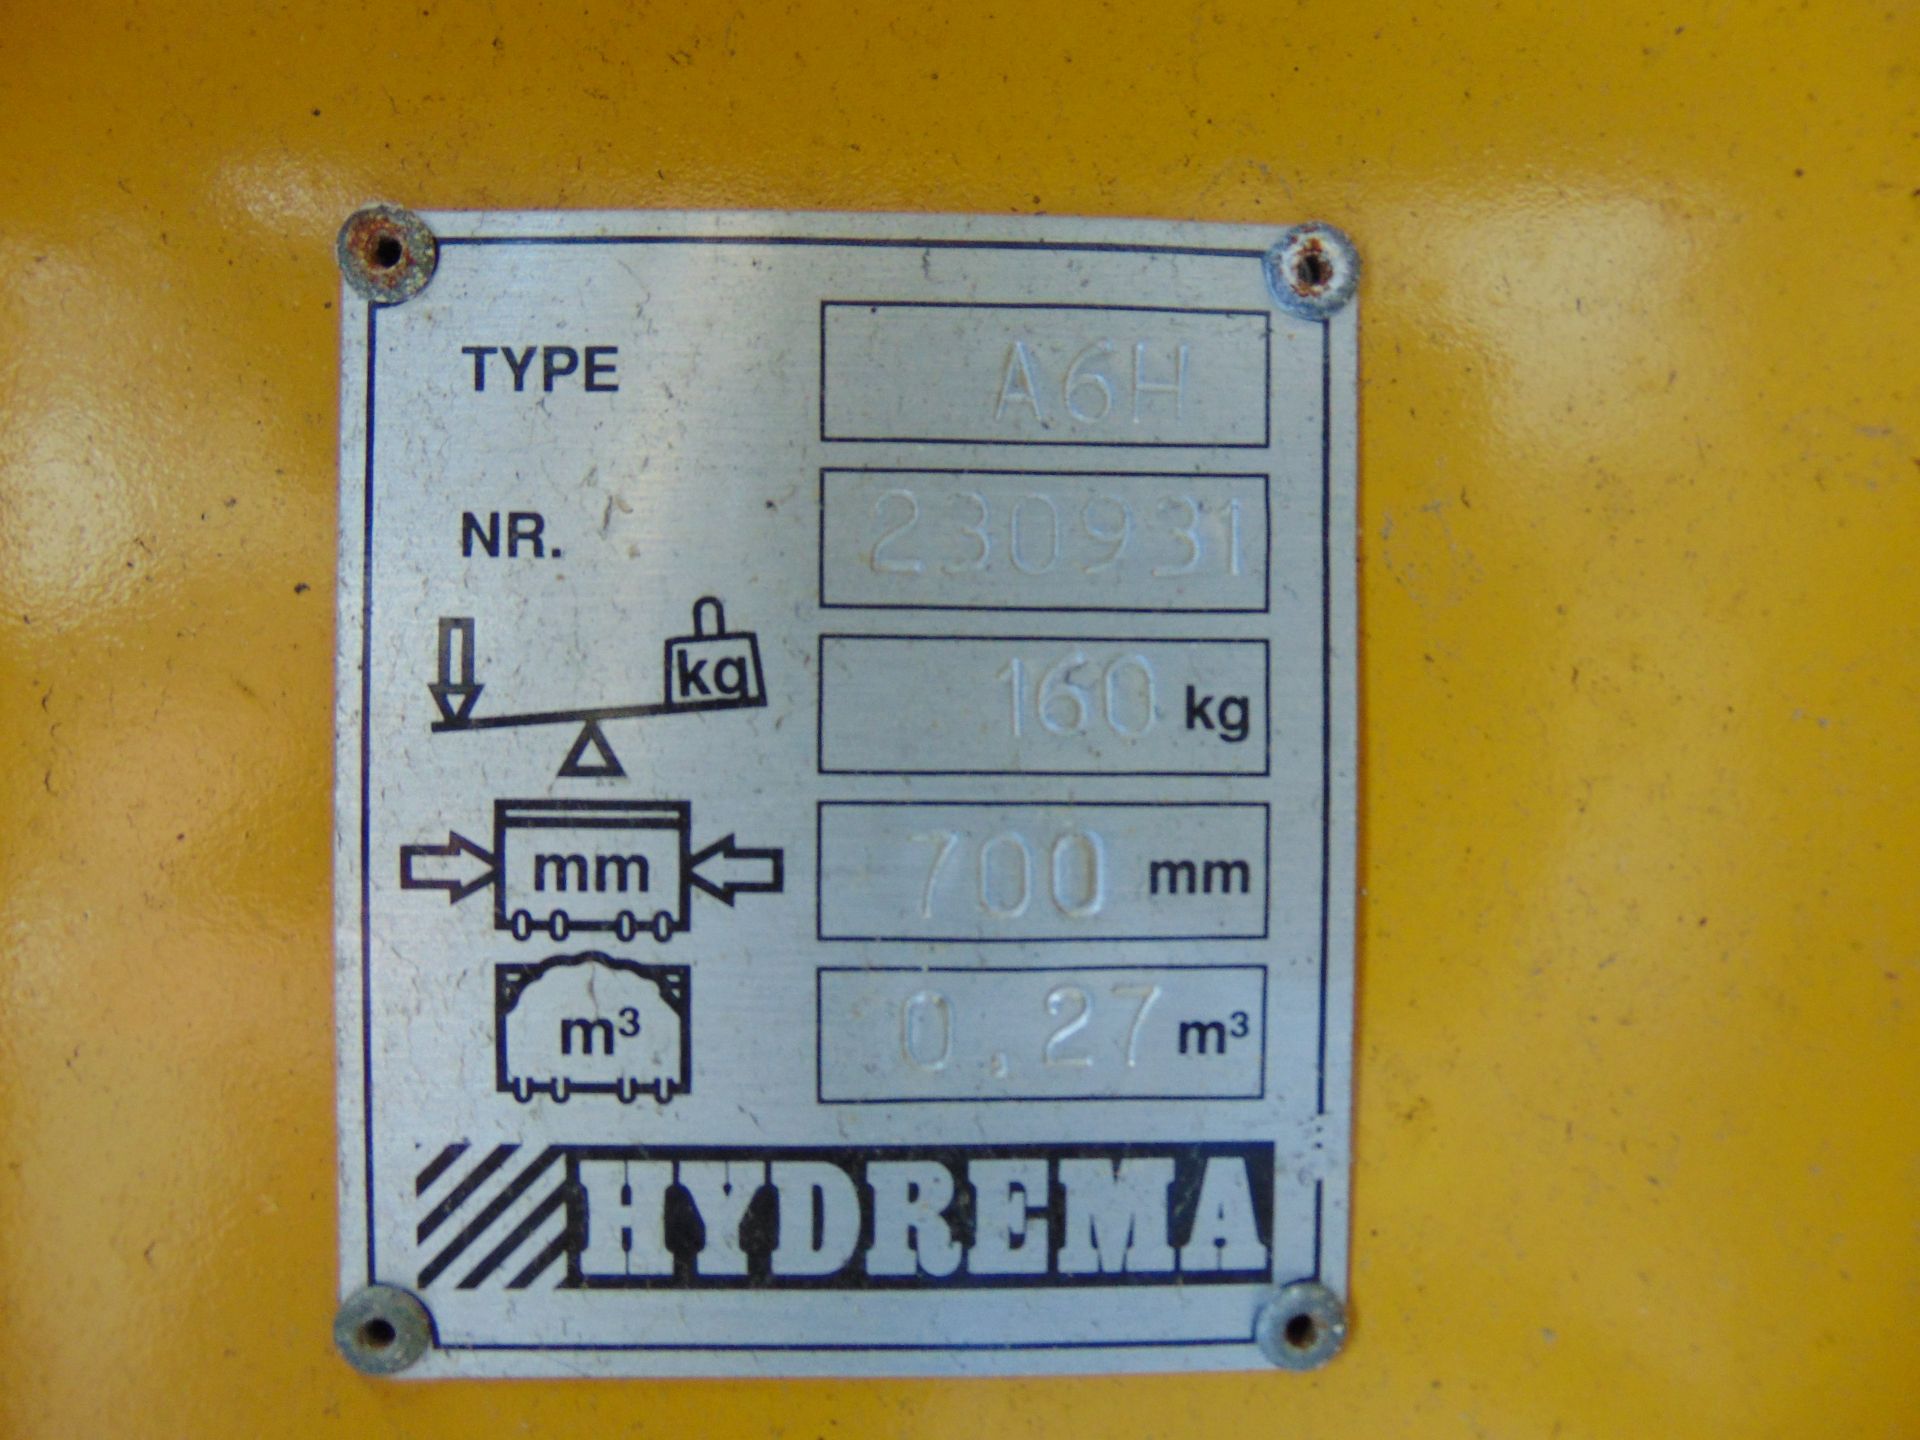 Hydrema A6H 700mm Excavator Bucket - Image 5 of 5